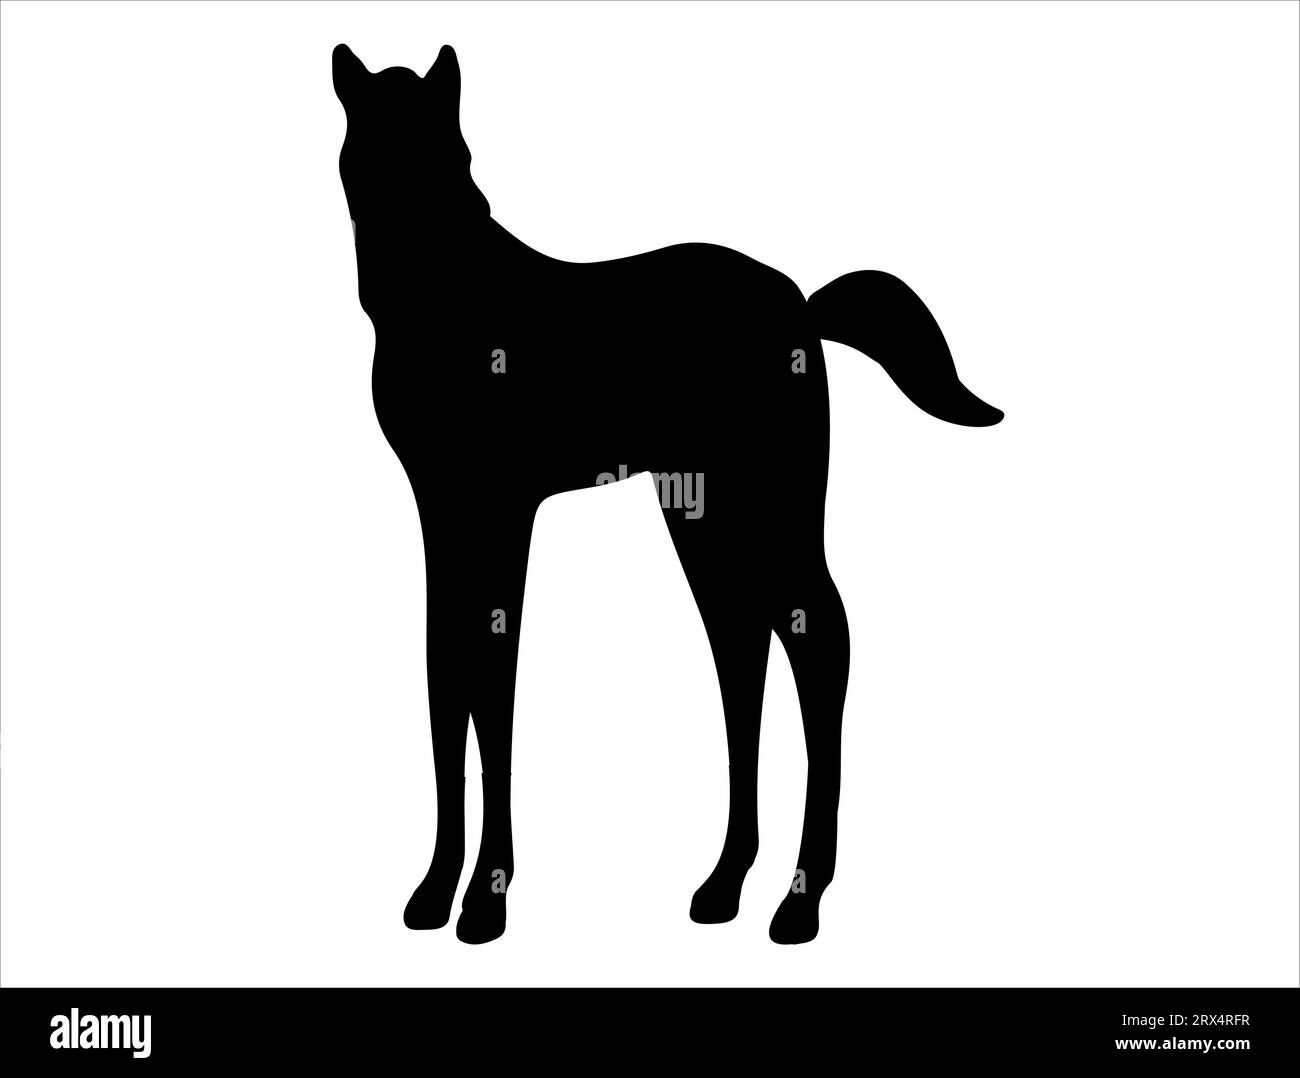 Foal silhouette vector art white background Stock Vector